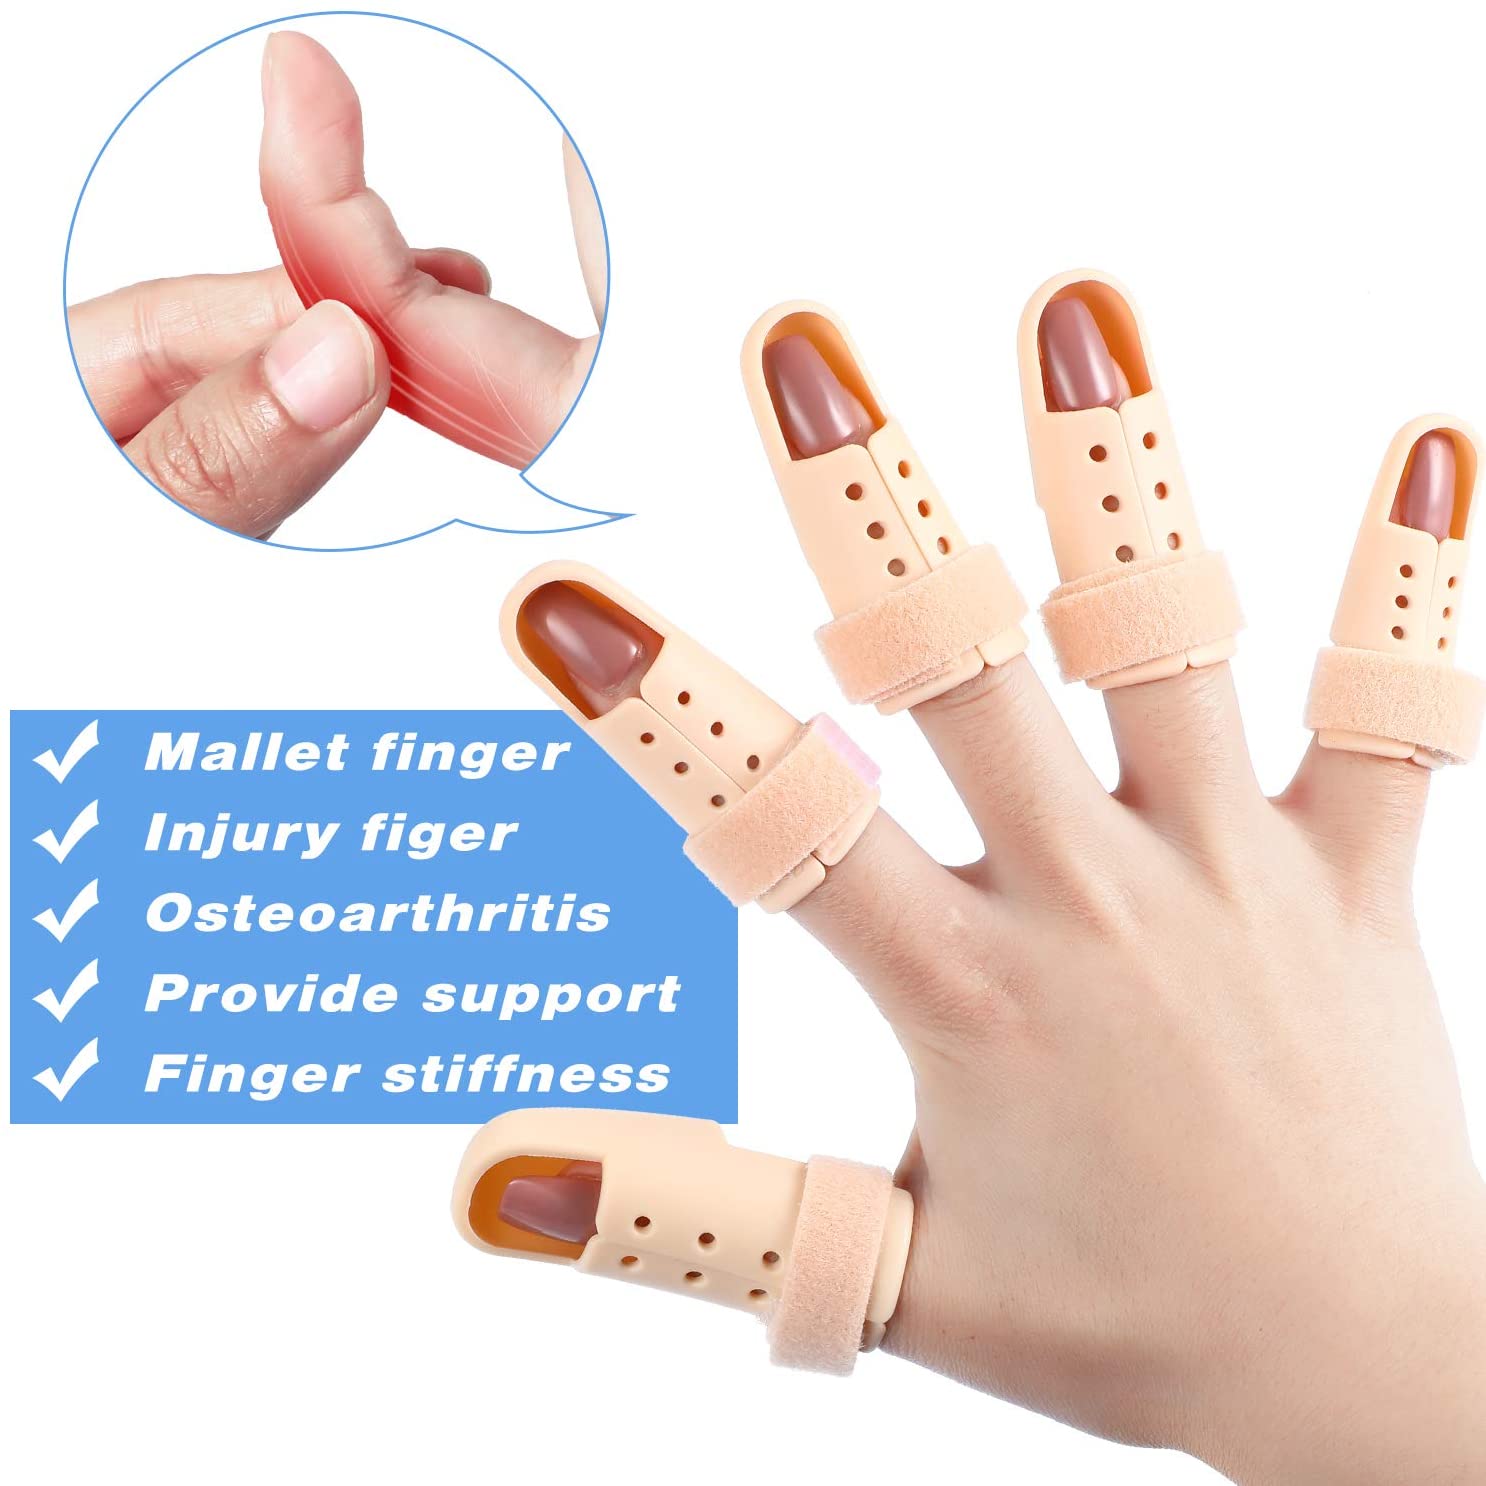 Hammer finger splint brace protector justerbar brudt finger joint stabilizer straightening arthritis knuck immobilisering